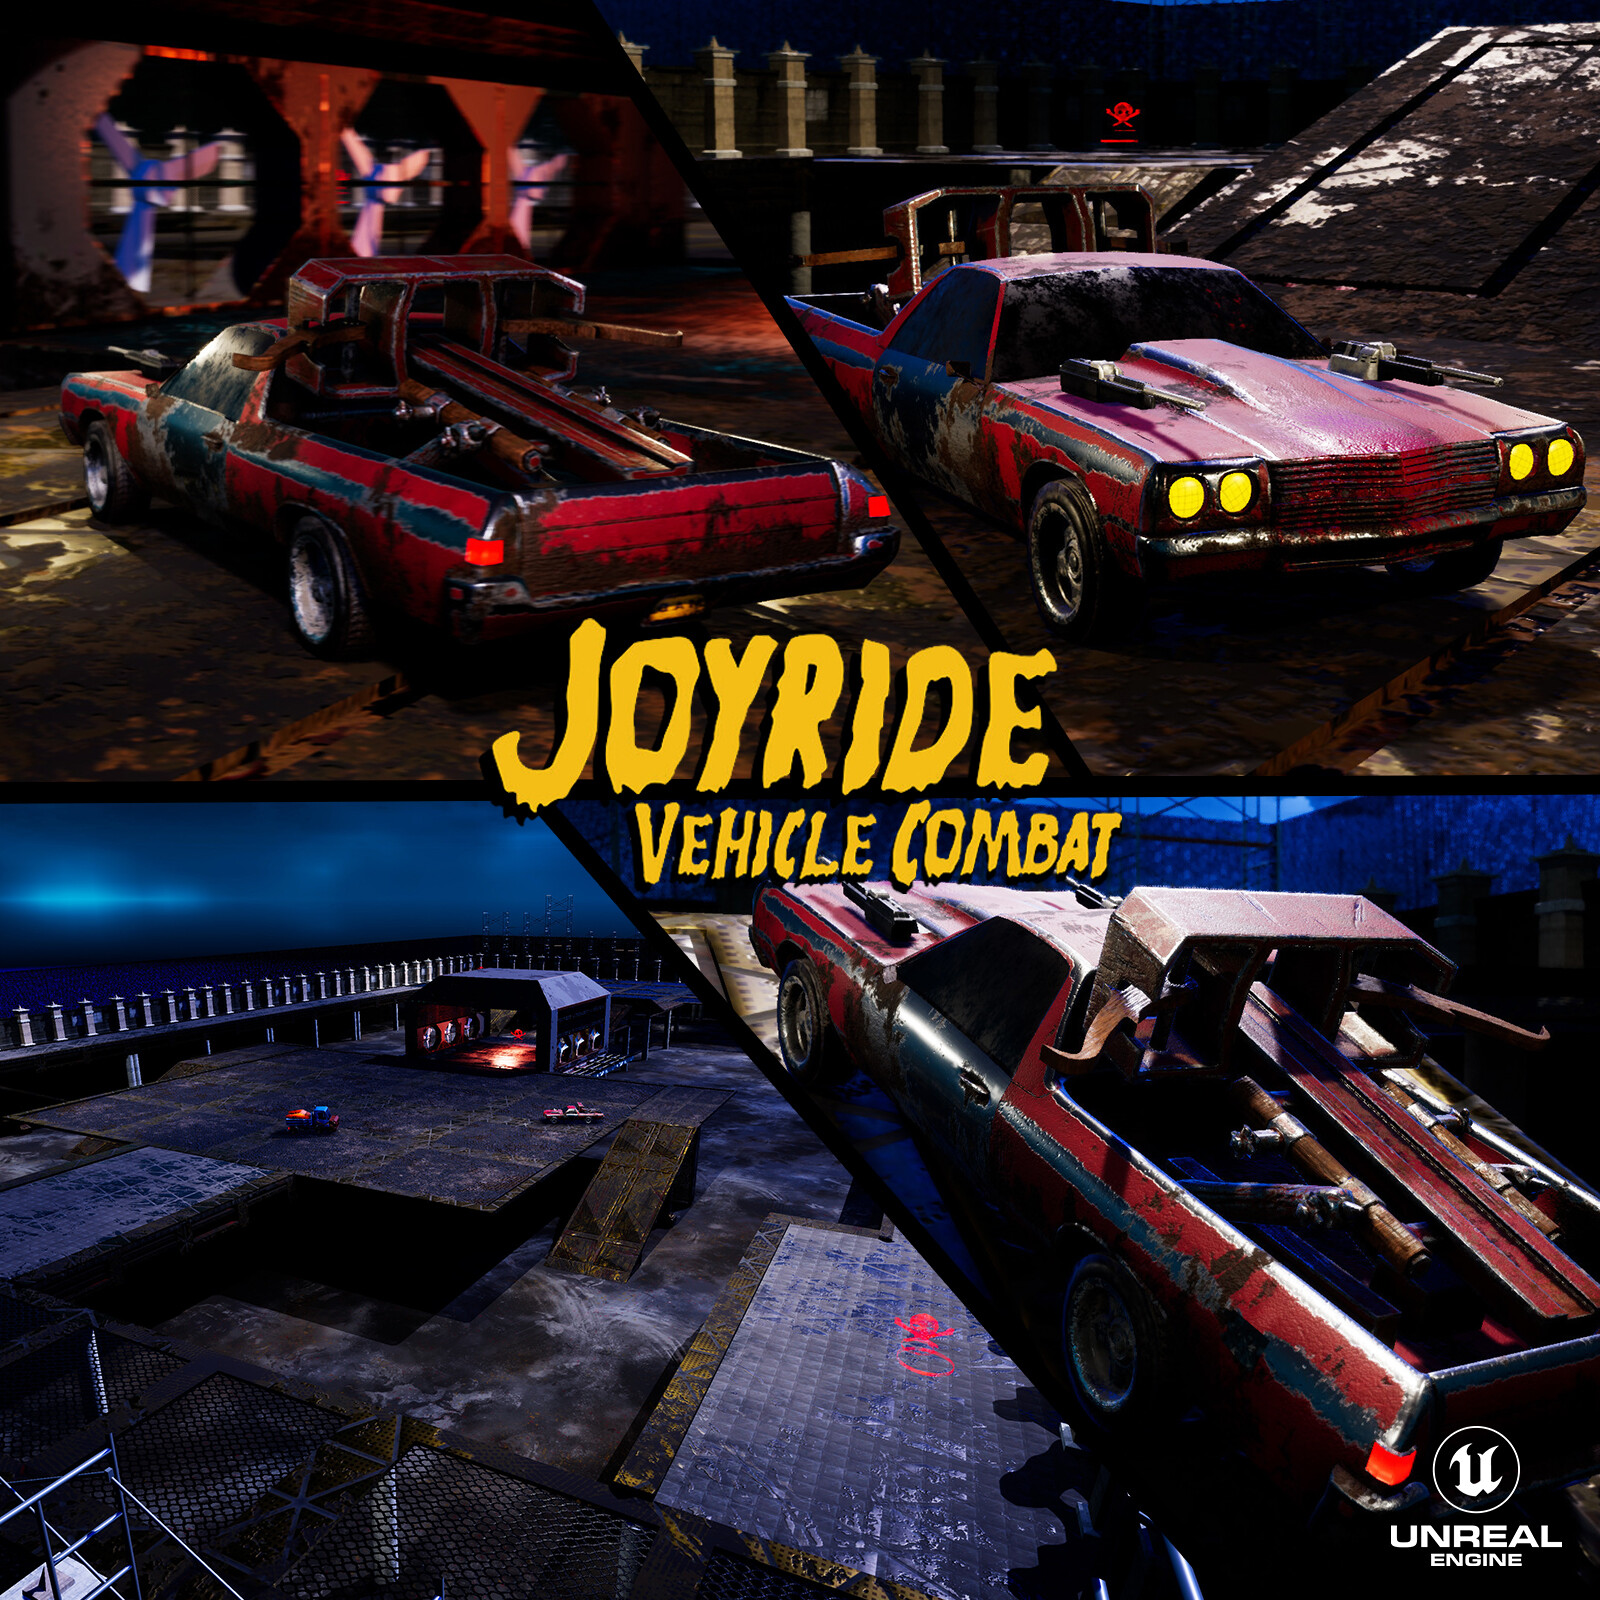 Joyride Vehicle Combat Asset Dump